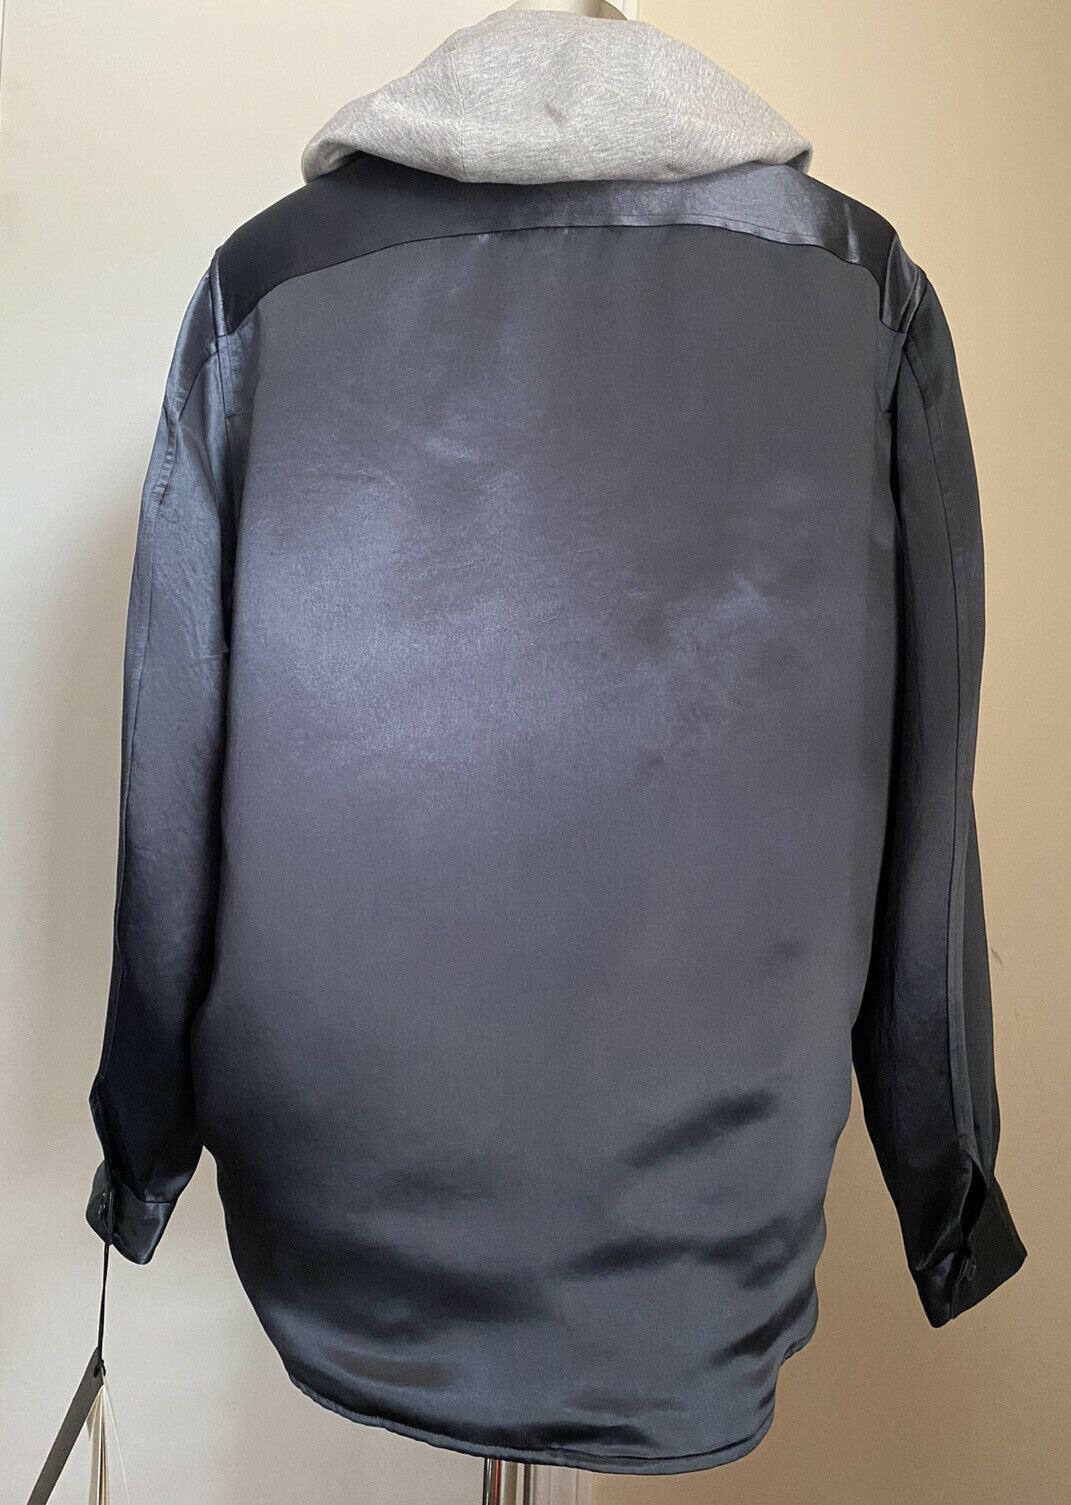 NWT $2850 Рубашка-пиджак Gucci Темно-синий/серый Размер XL Италия